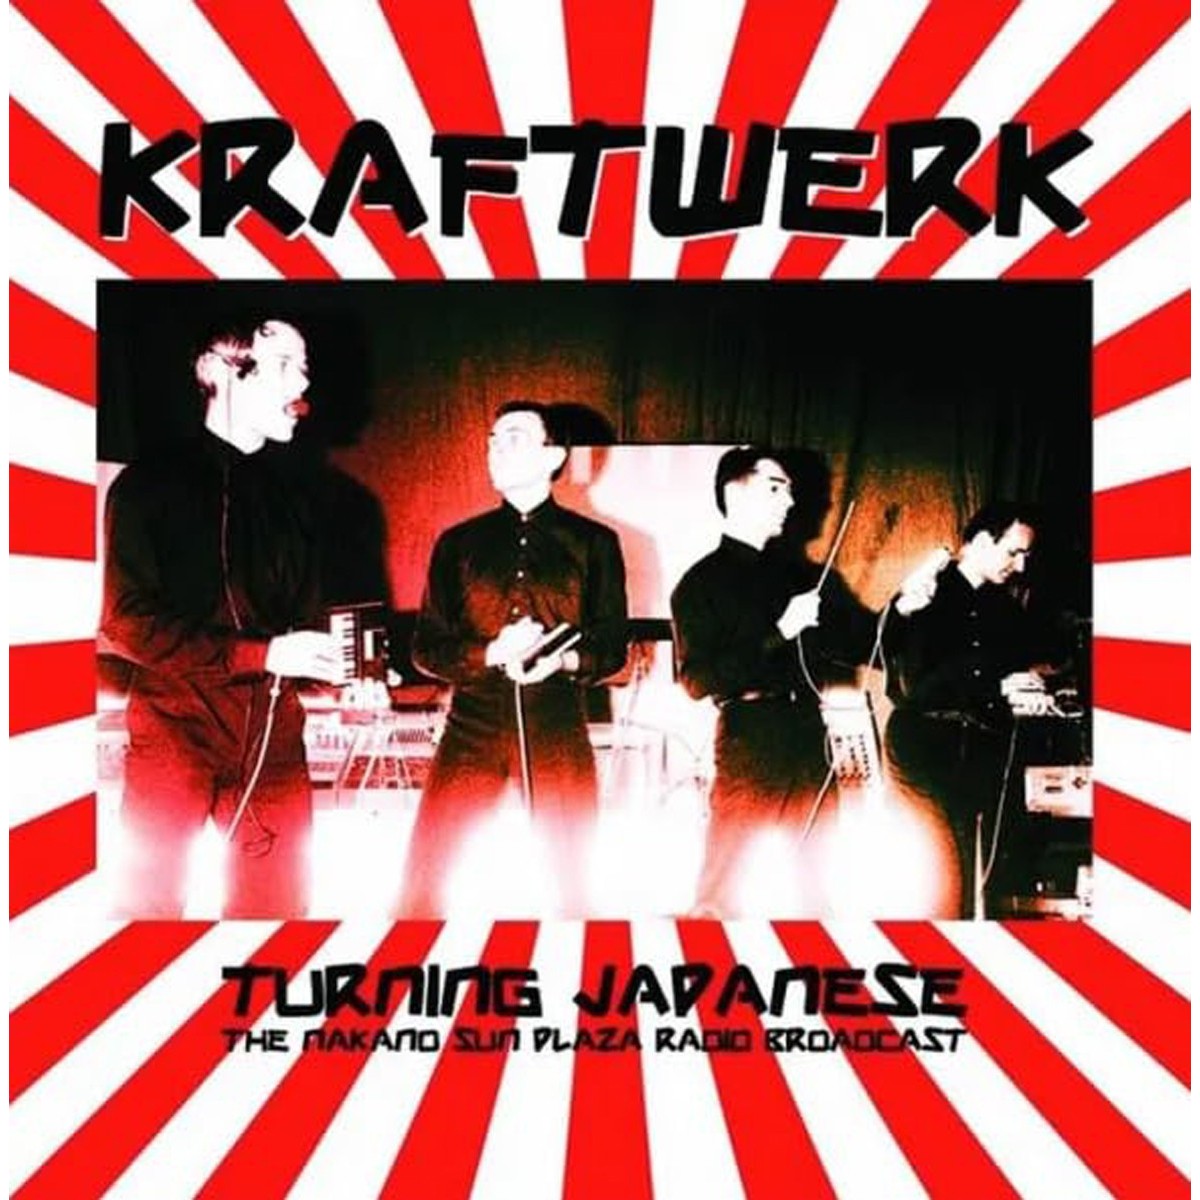 Kraftwerk - Turning Japanese: The Nakano Sun Plaza - Radio Broadcast